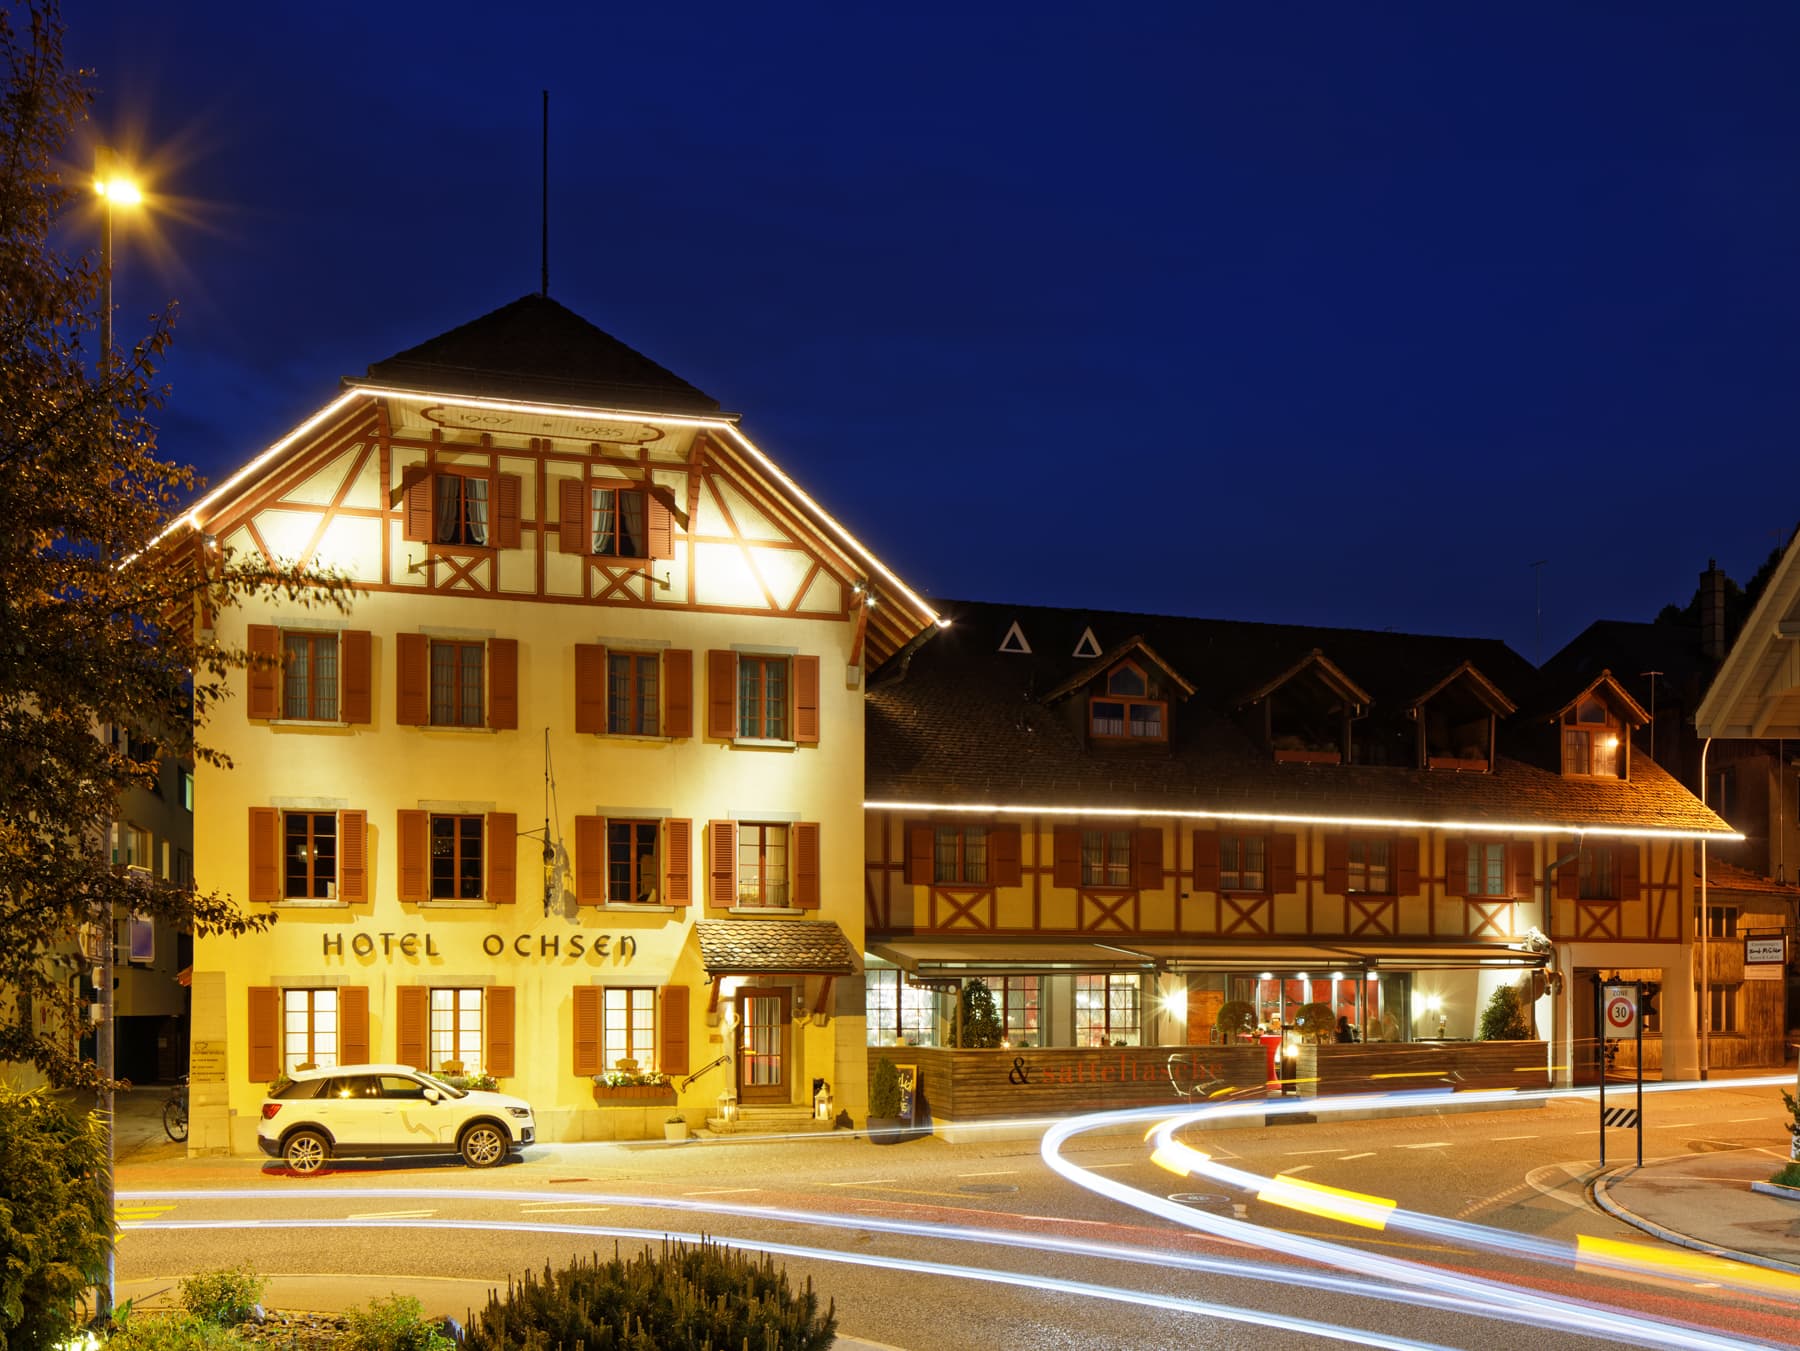 Ochsen Hotel Restaurant Lodge, Lenzburg